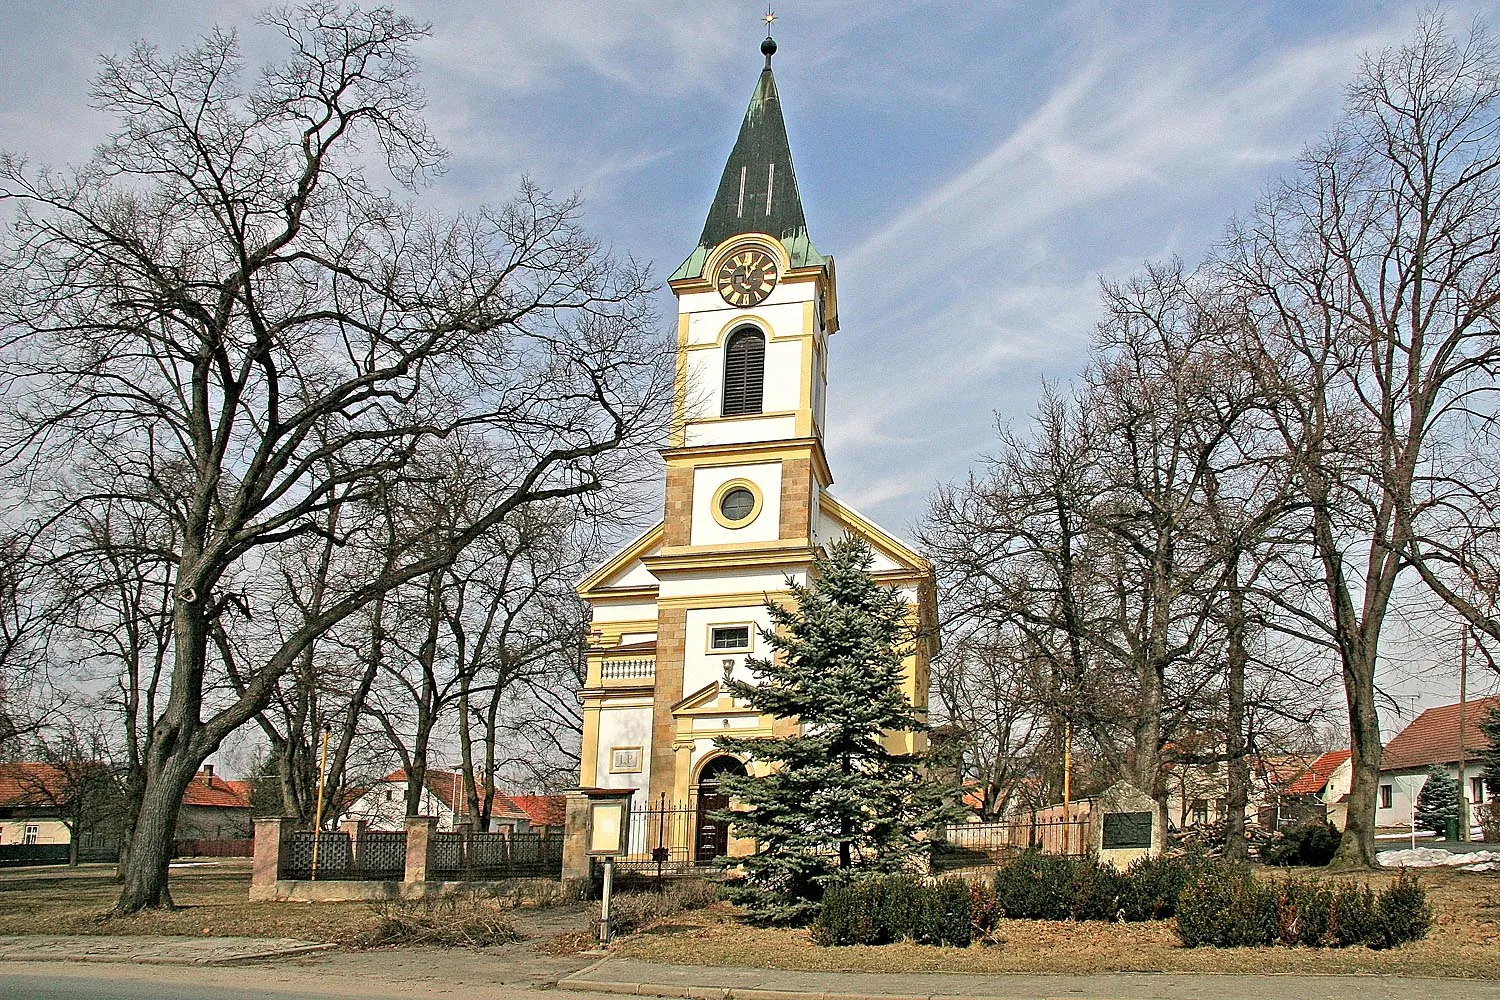 Photo showing: Evangelický kostel v Opolanech, district Kolín
autor: Prazak

date: 24. 3. 2006